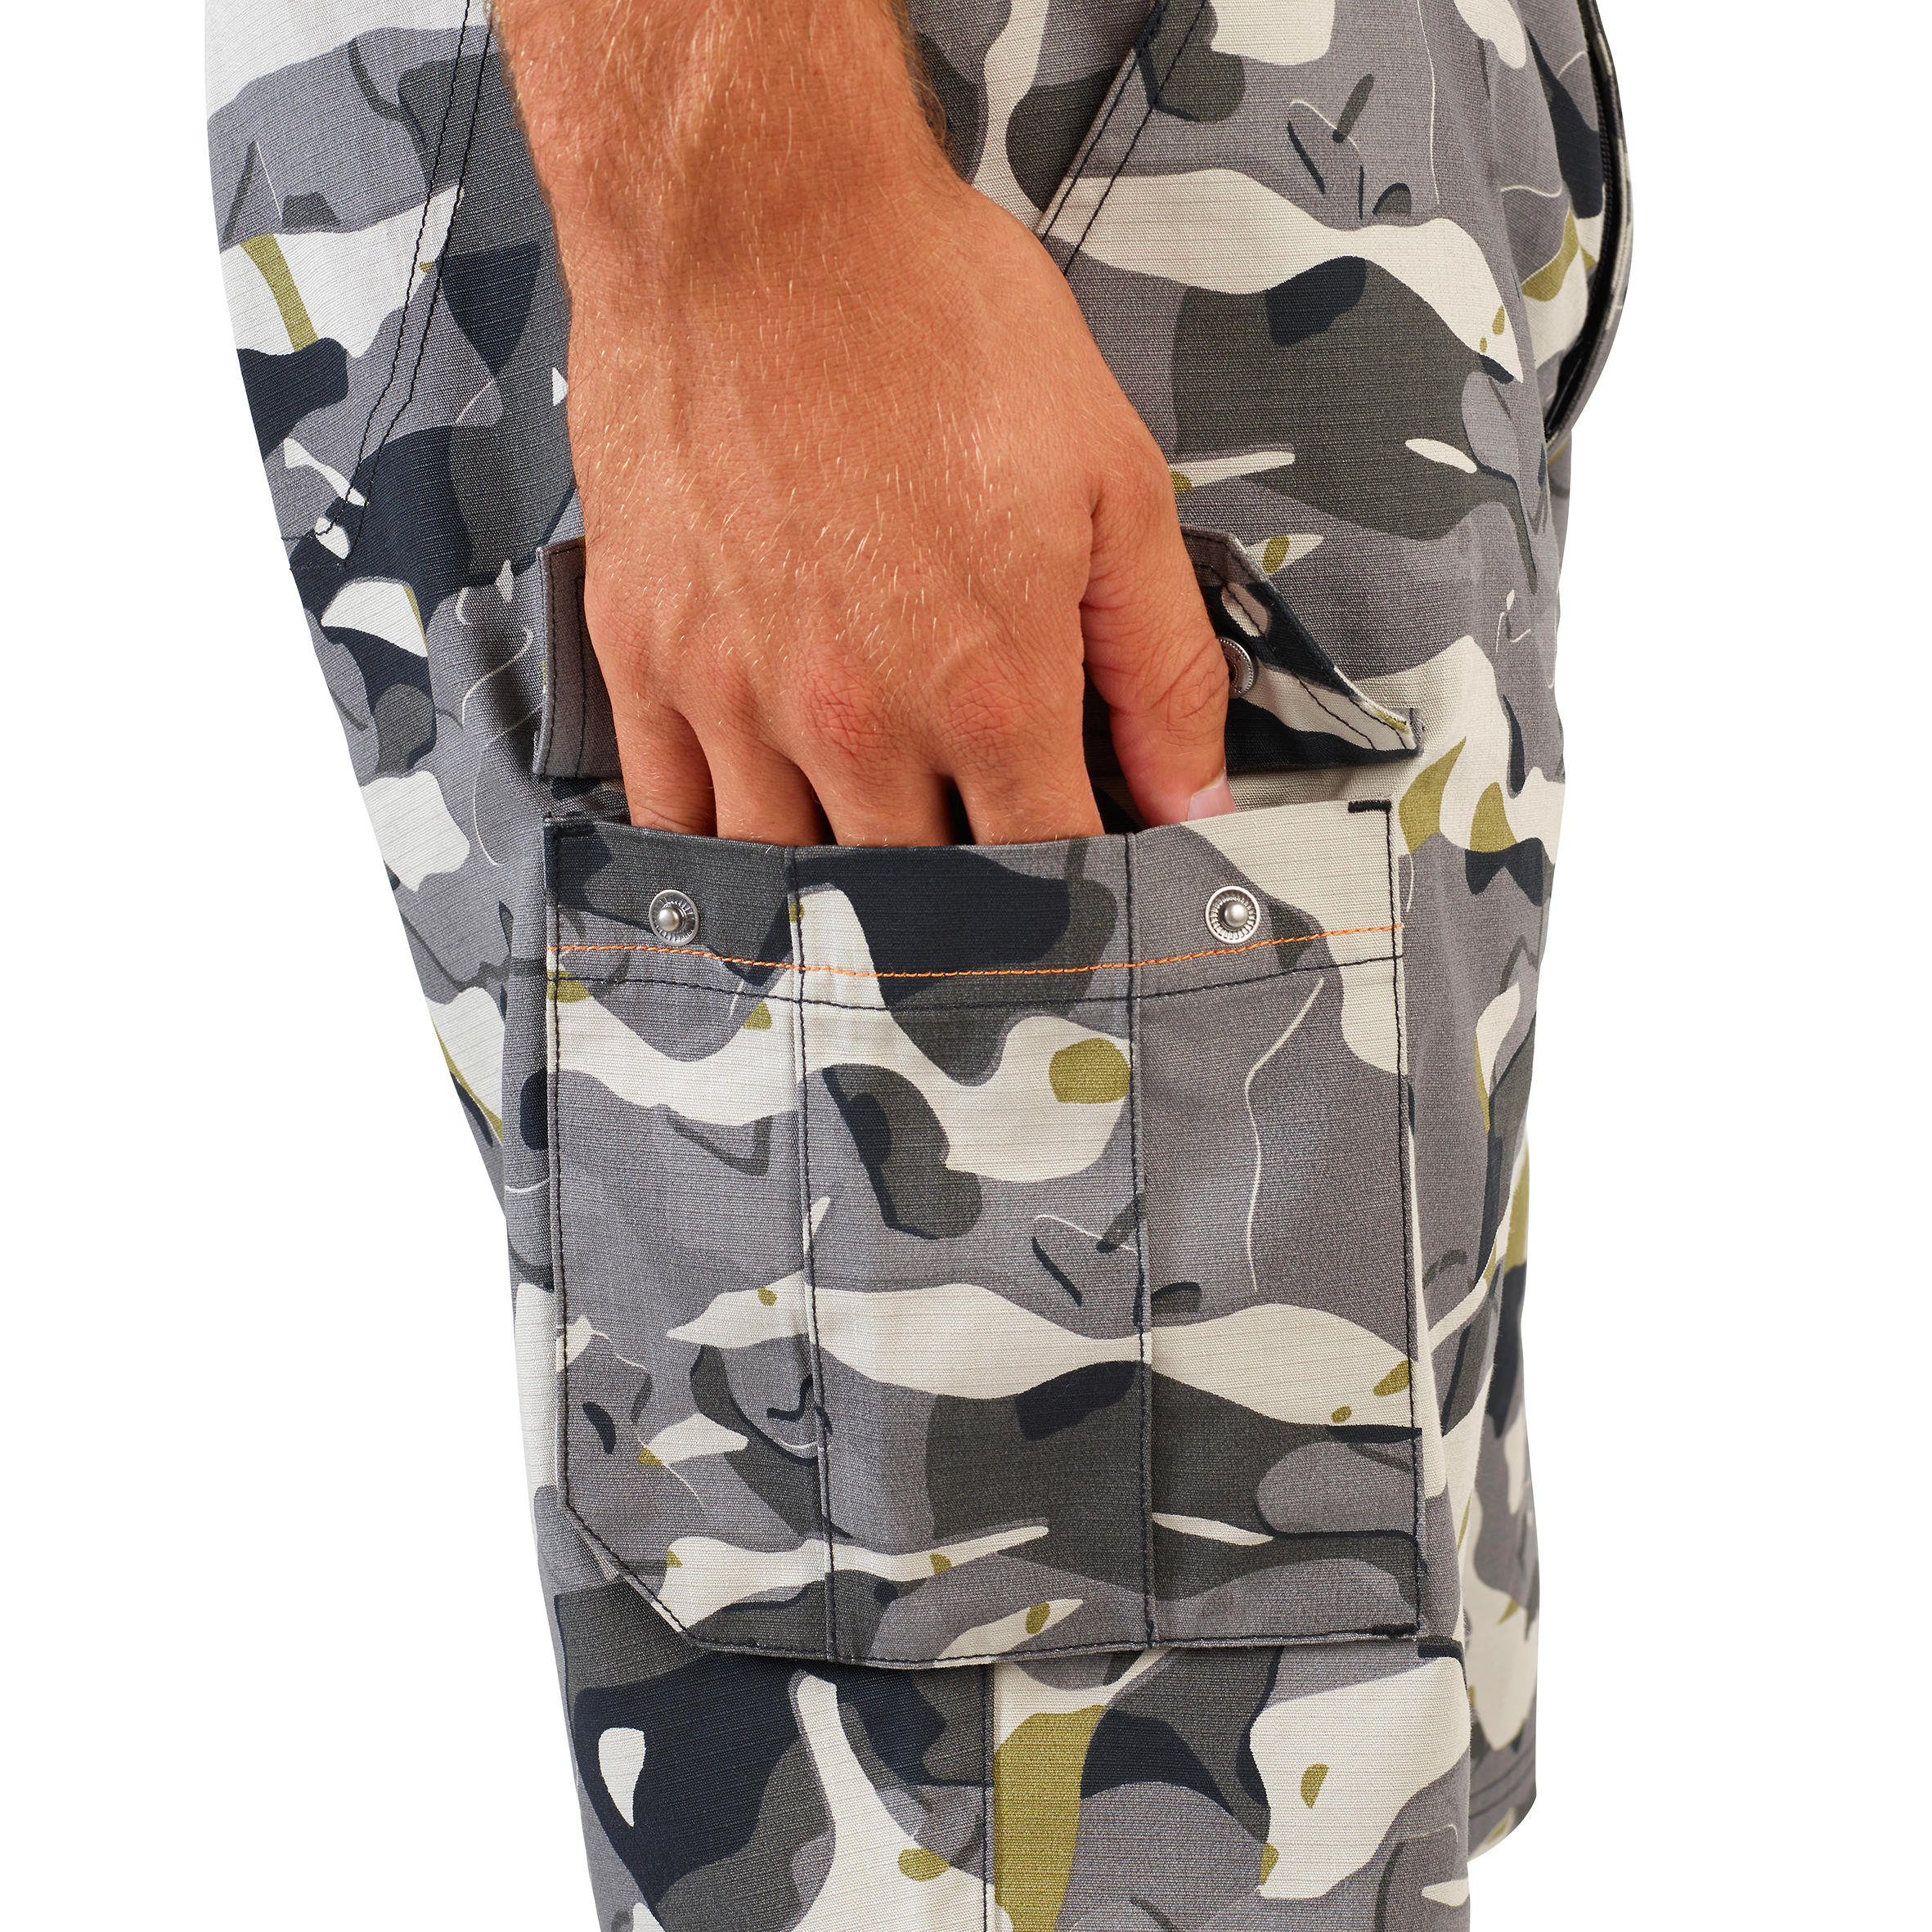 Bermuda shorts 500 - Woodland V1 mineral grey LTD camouflage 10/13